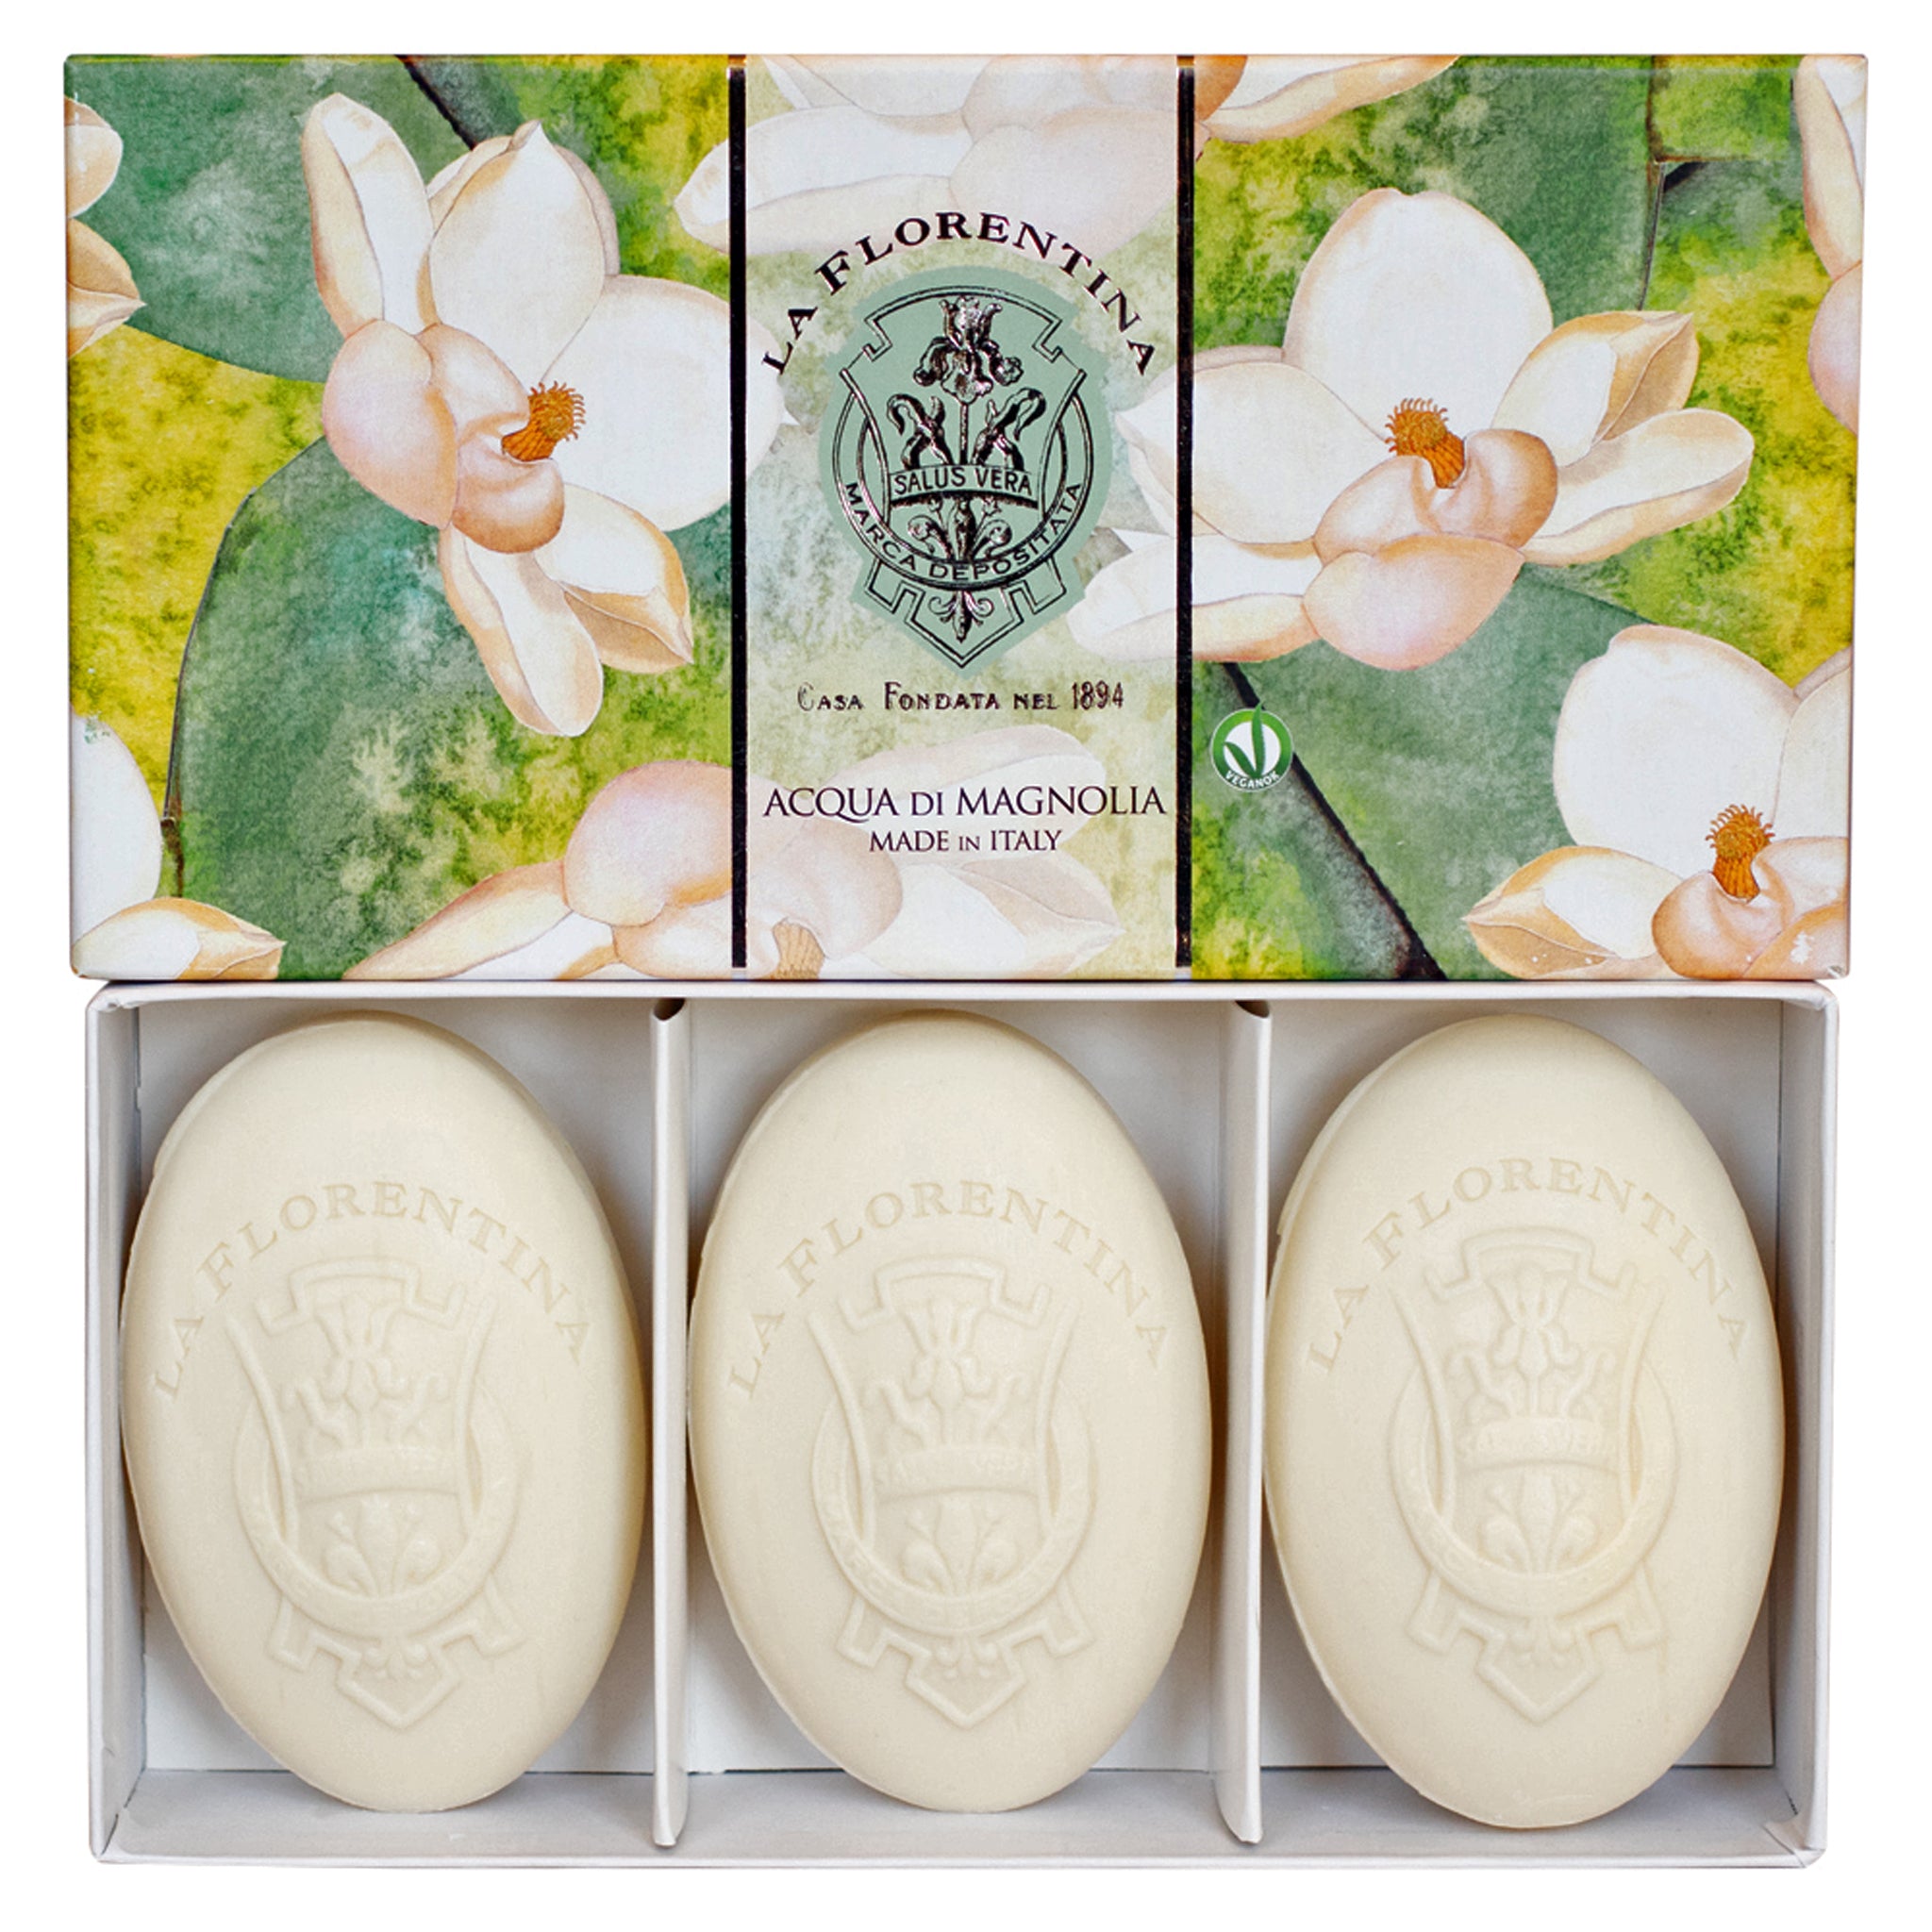 La Florentina Magnolia Soap 3 Bars 150g Gift Boxed